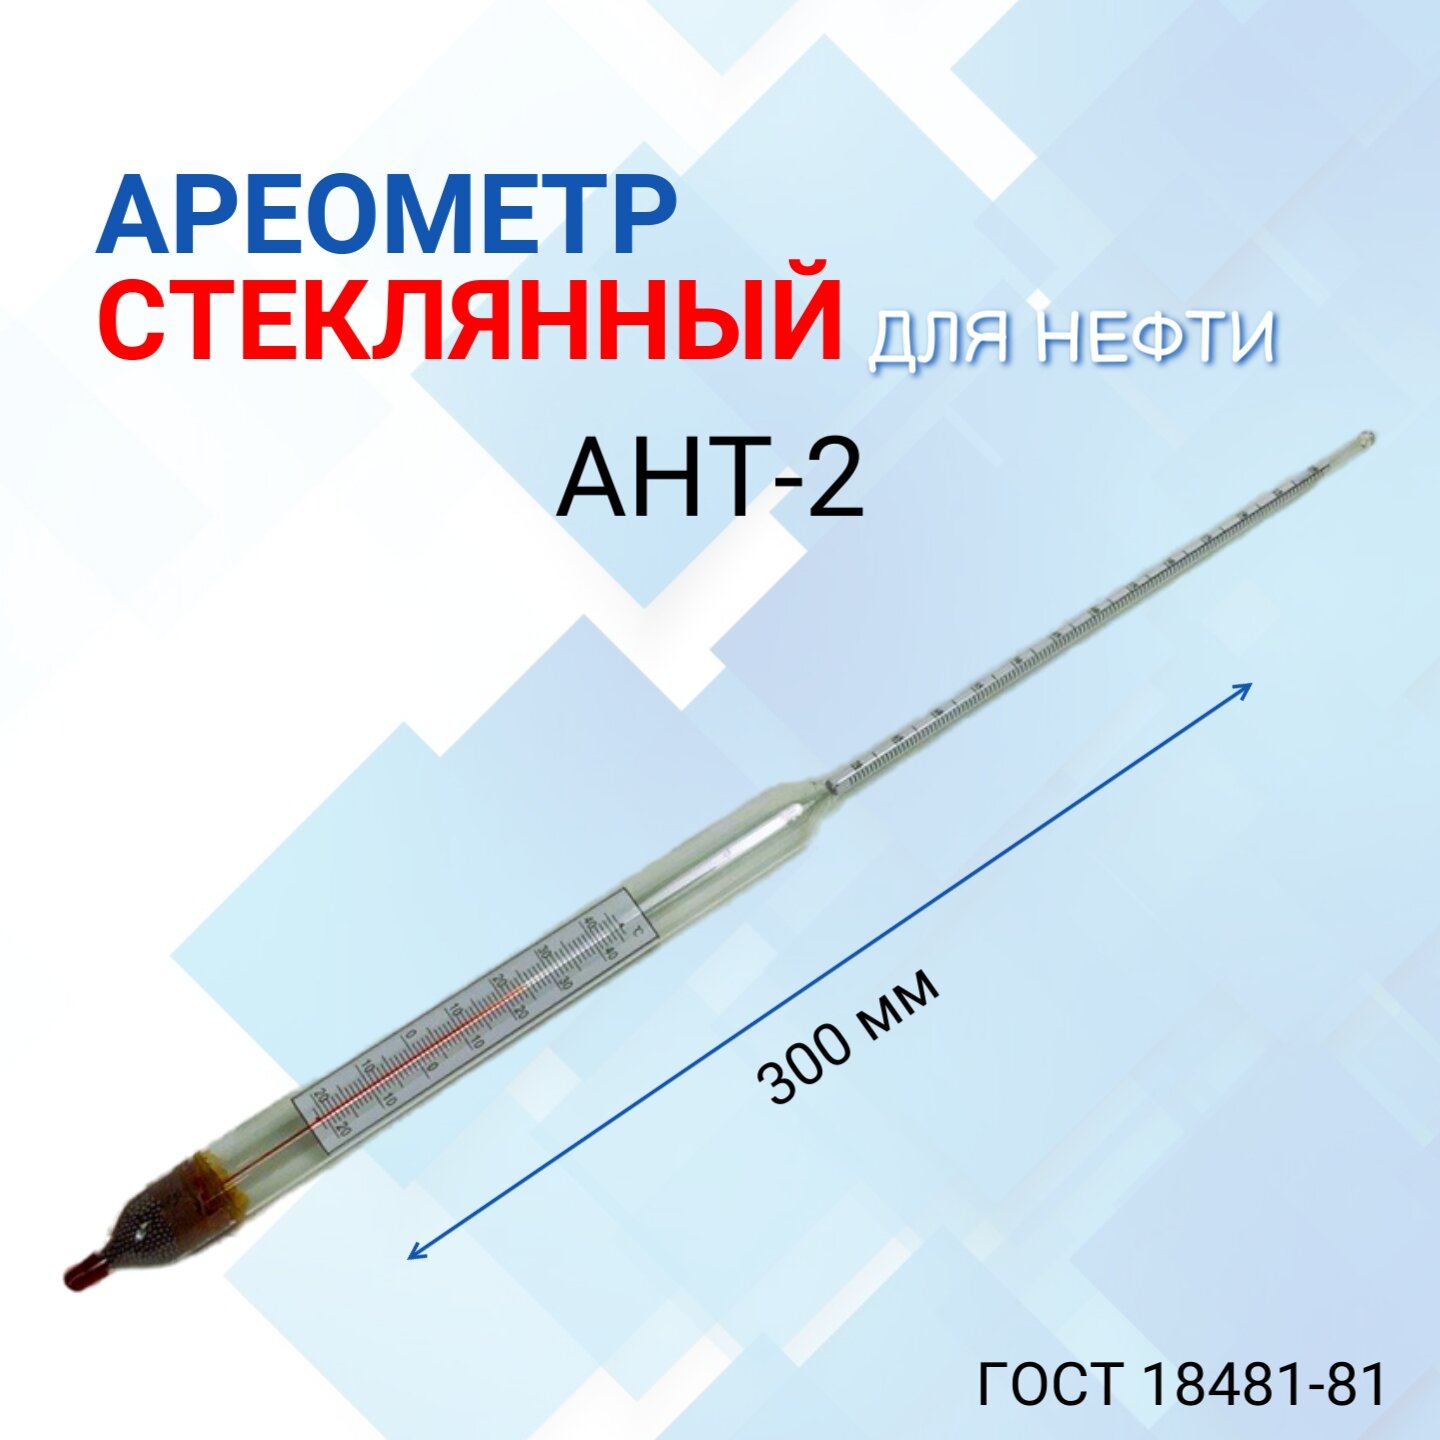 Ареометр "АНТ-2" 990-1070 с поверкой РФ